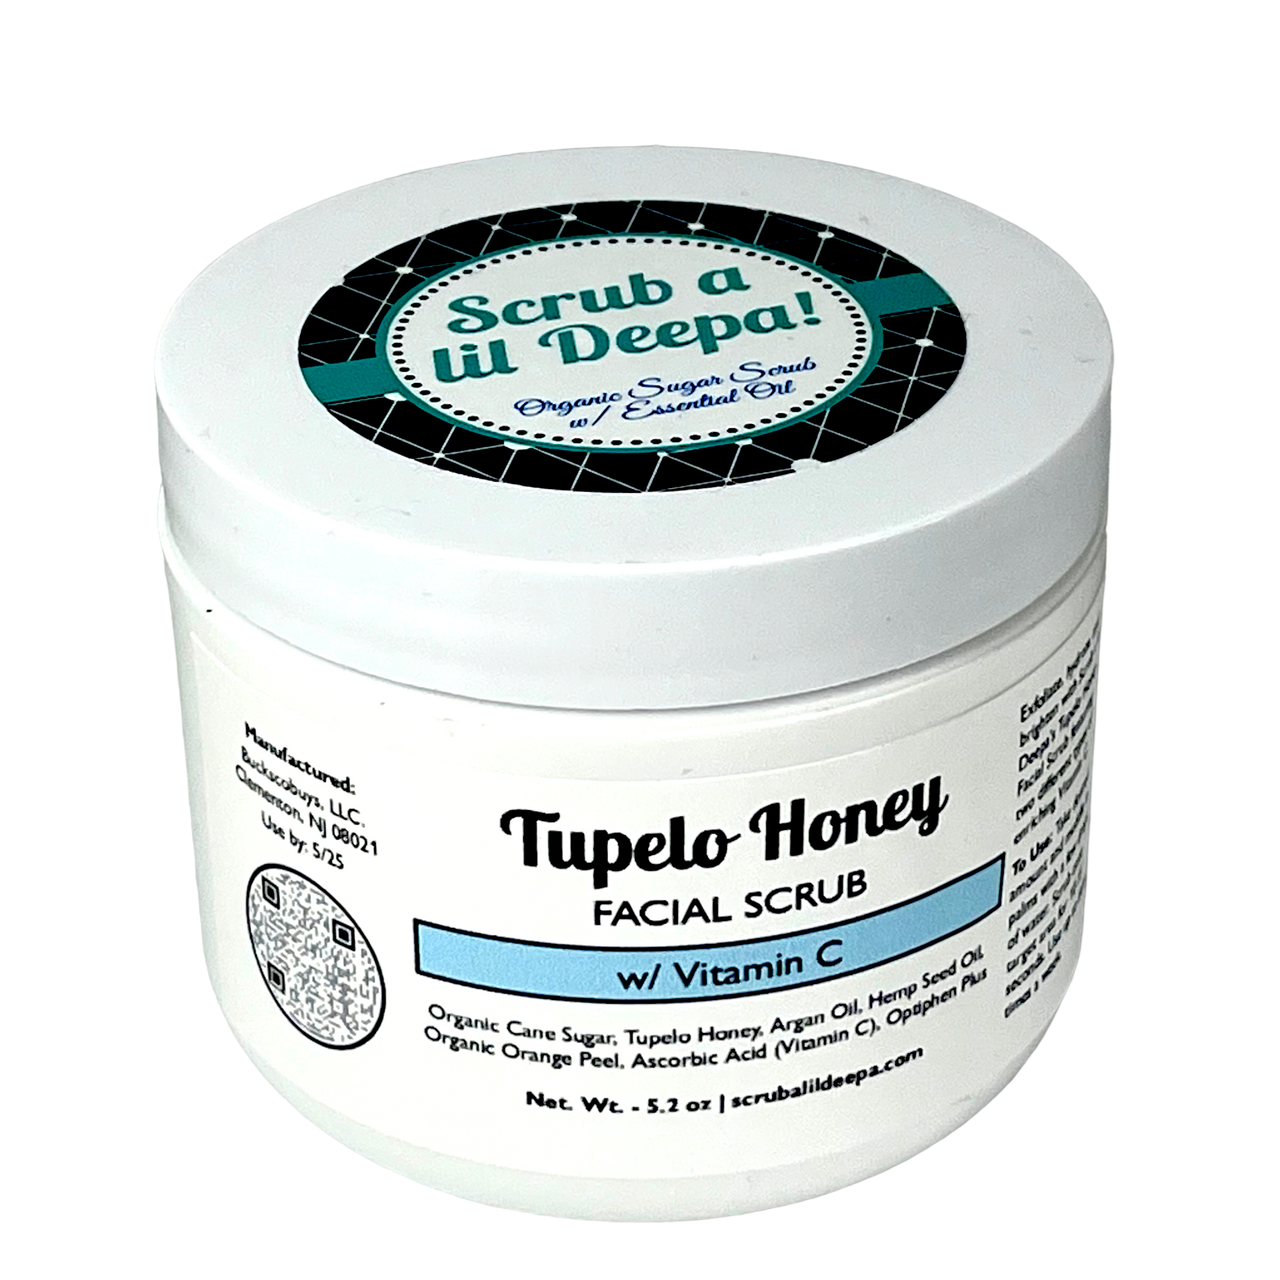 Tupelo Honey Facial Scrub with Vitamin C